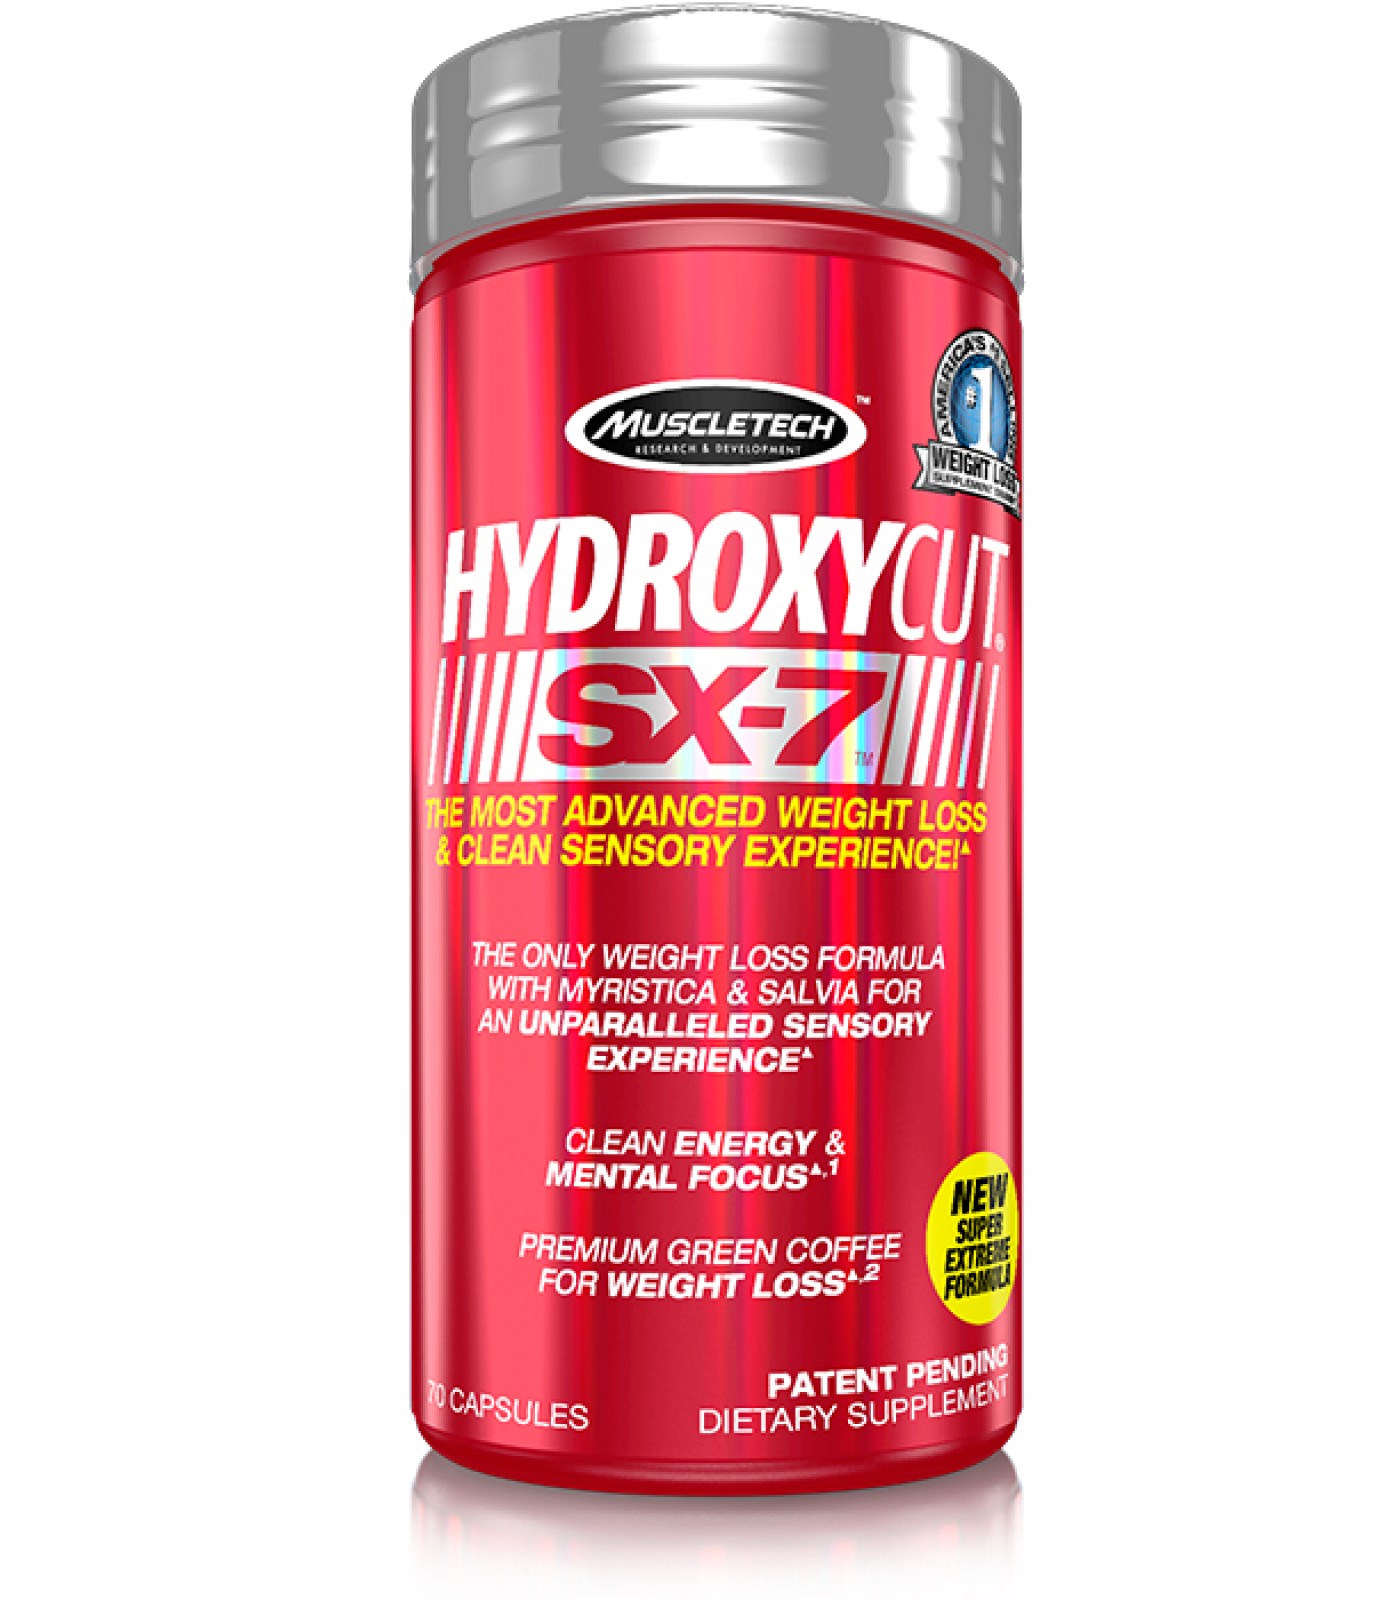 2 hydroxycut sx 7 super extreme formula 140 x 2